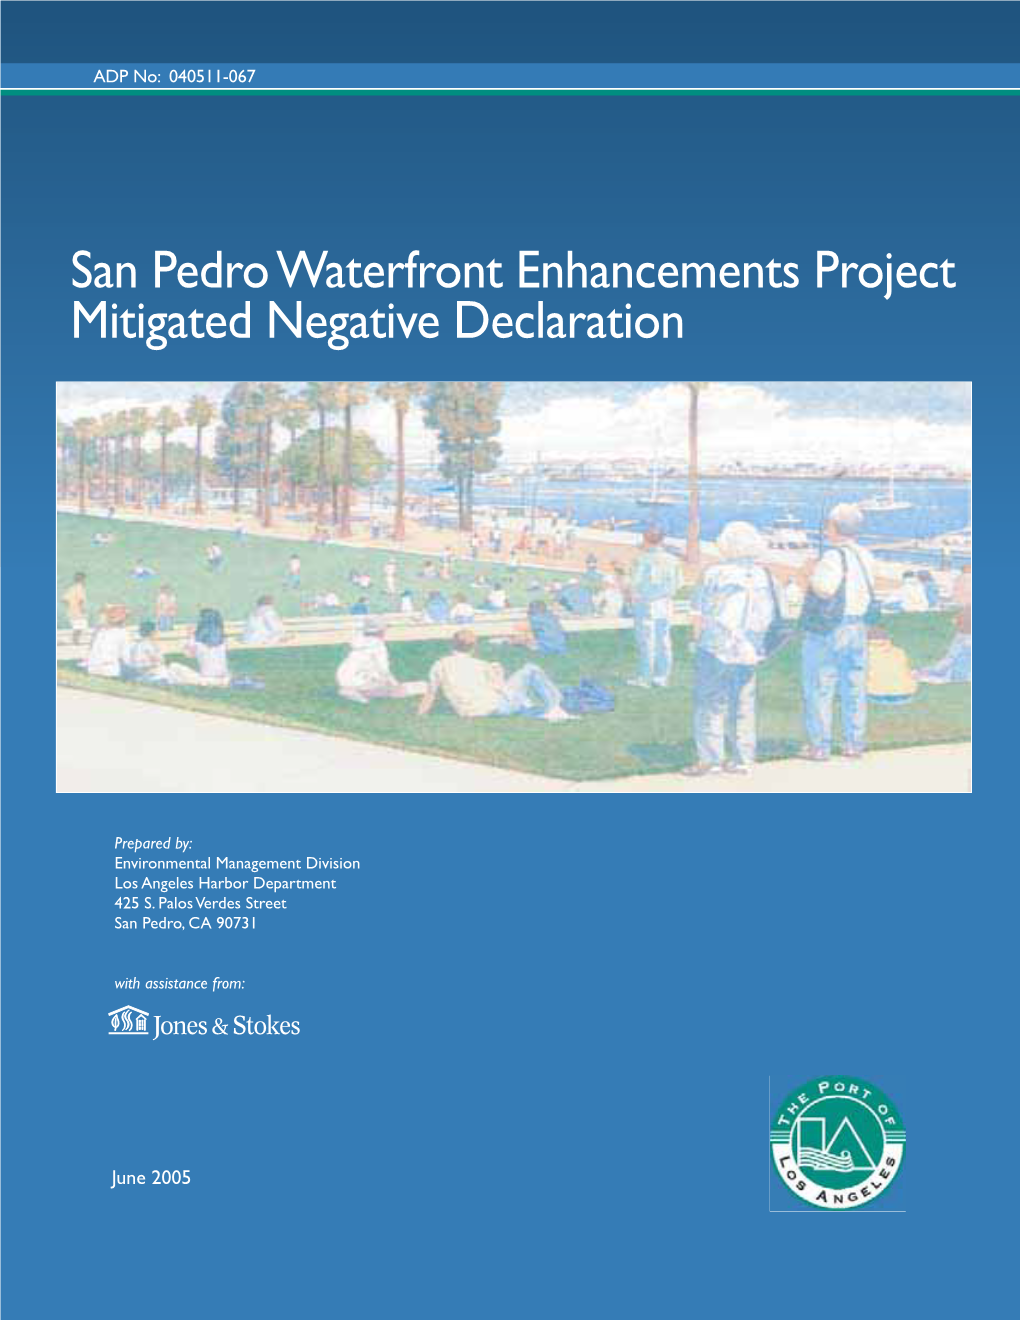 San Pedro Waterfront Enhancements Project Mitigated Negative Declaration